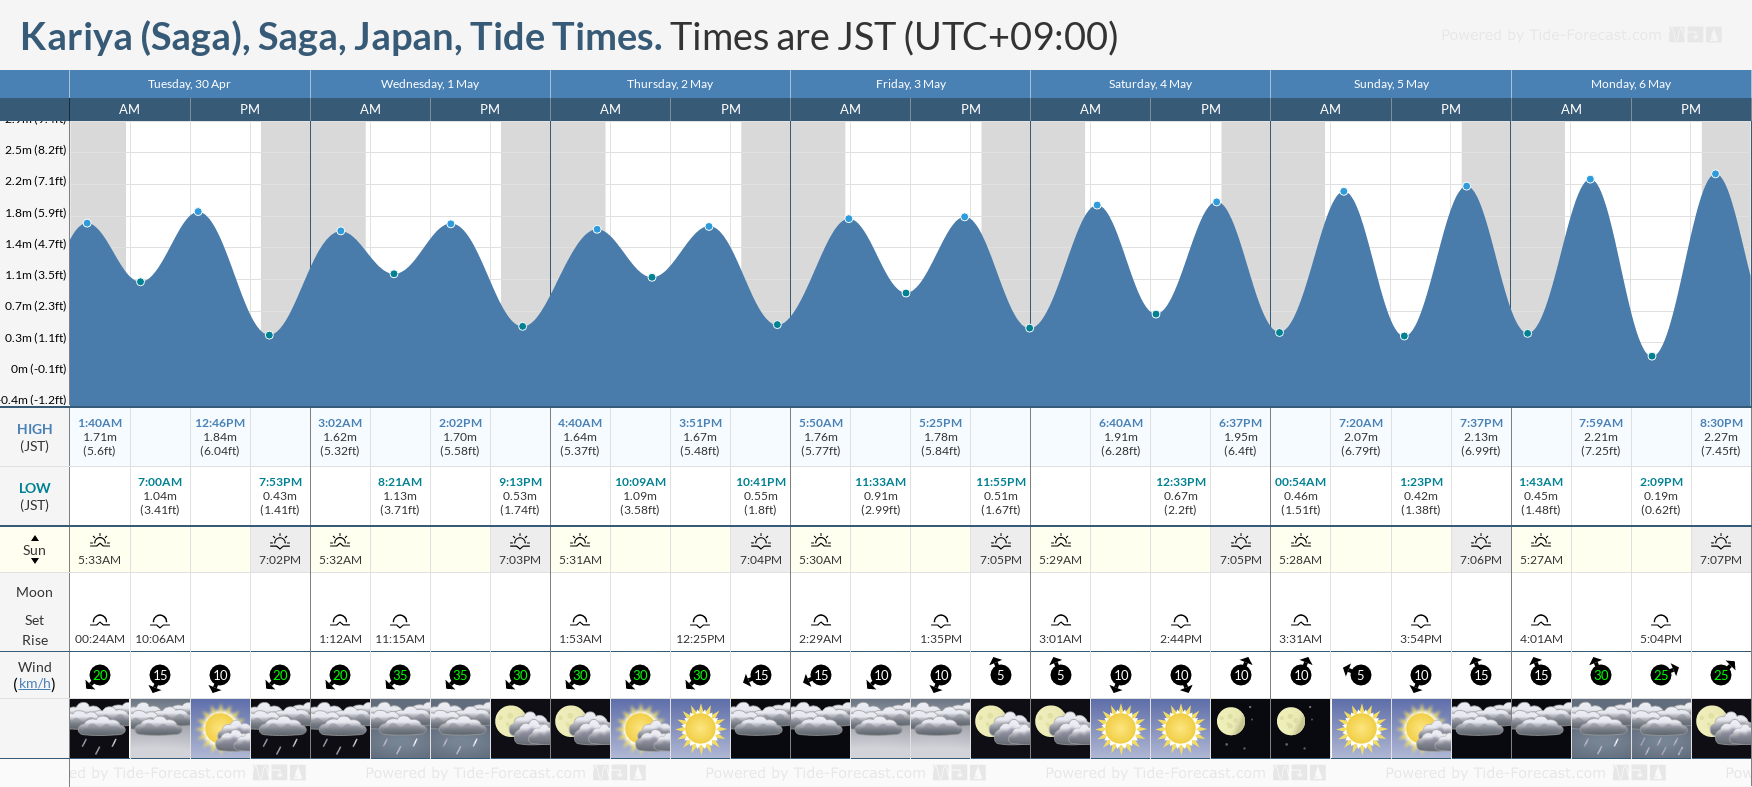 Kariya (Saga), Saga, Japan Tide Chart including high and low tide tide times for the next 7 days